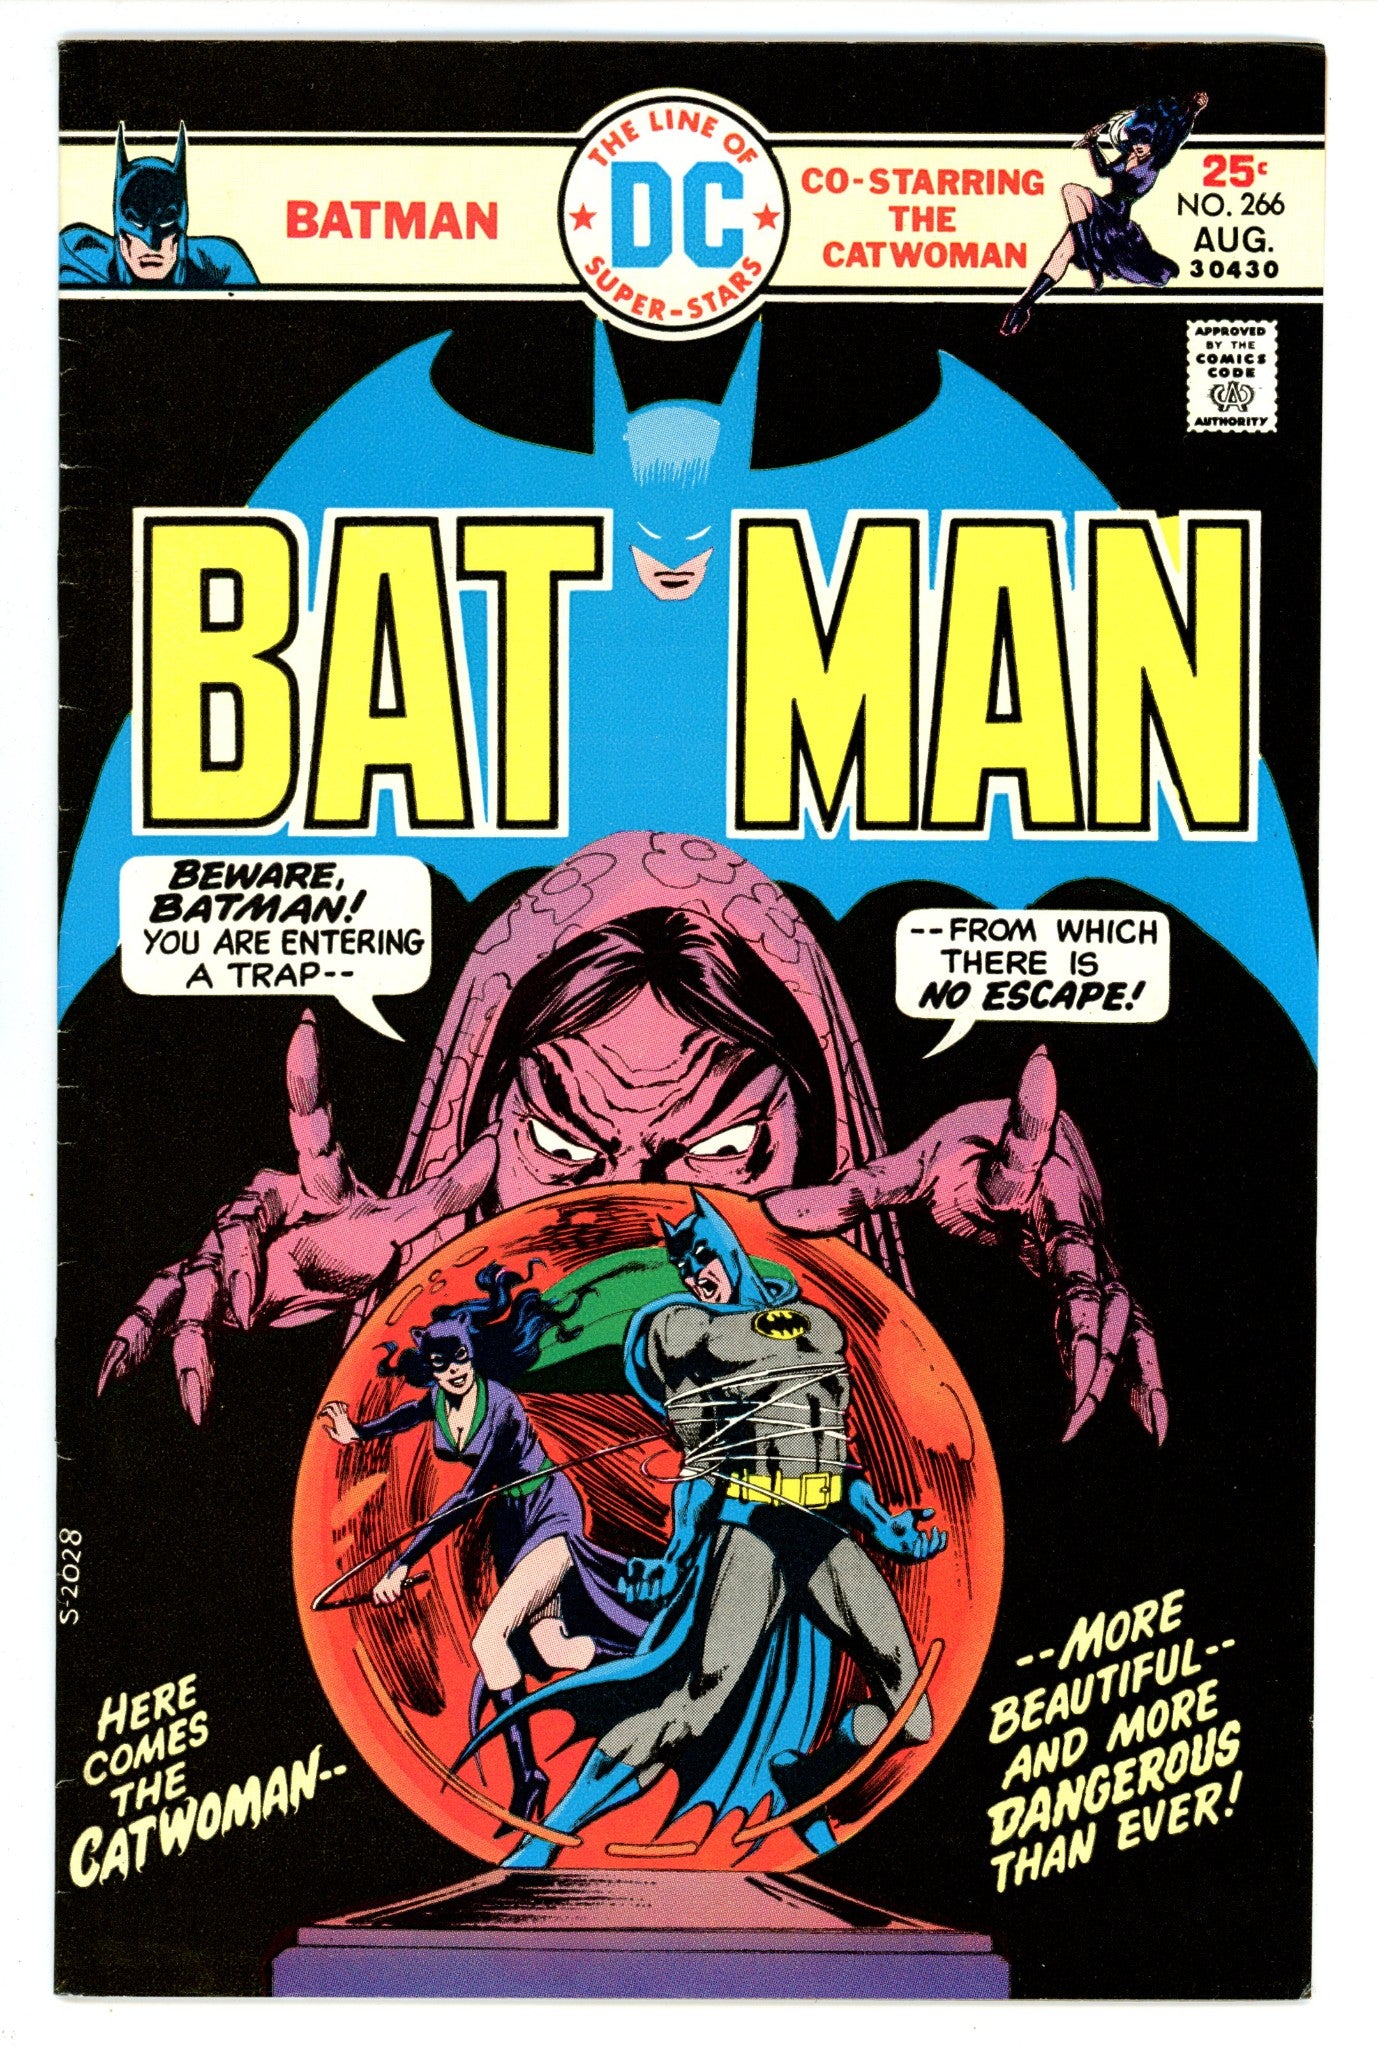 Batman Vol 1 266 FN/VF (7.0) (1975) 